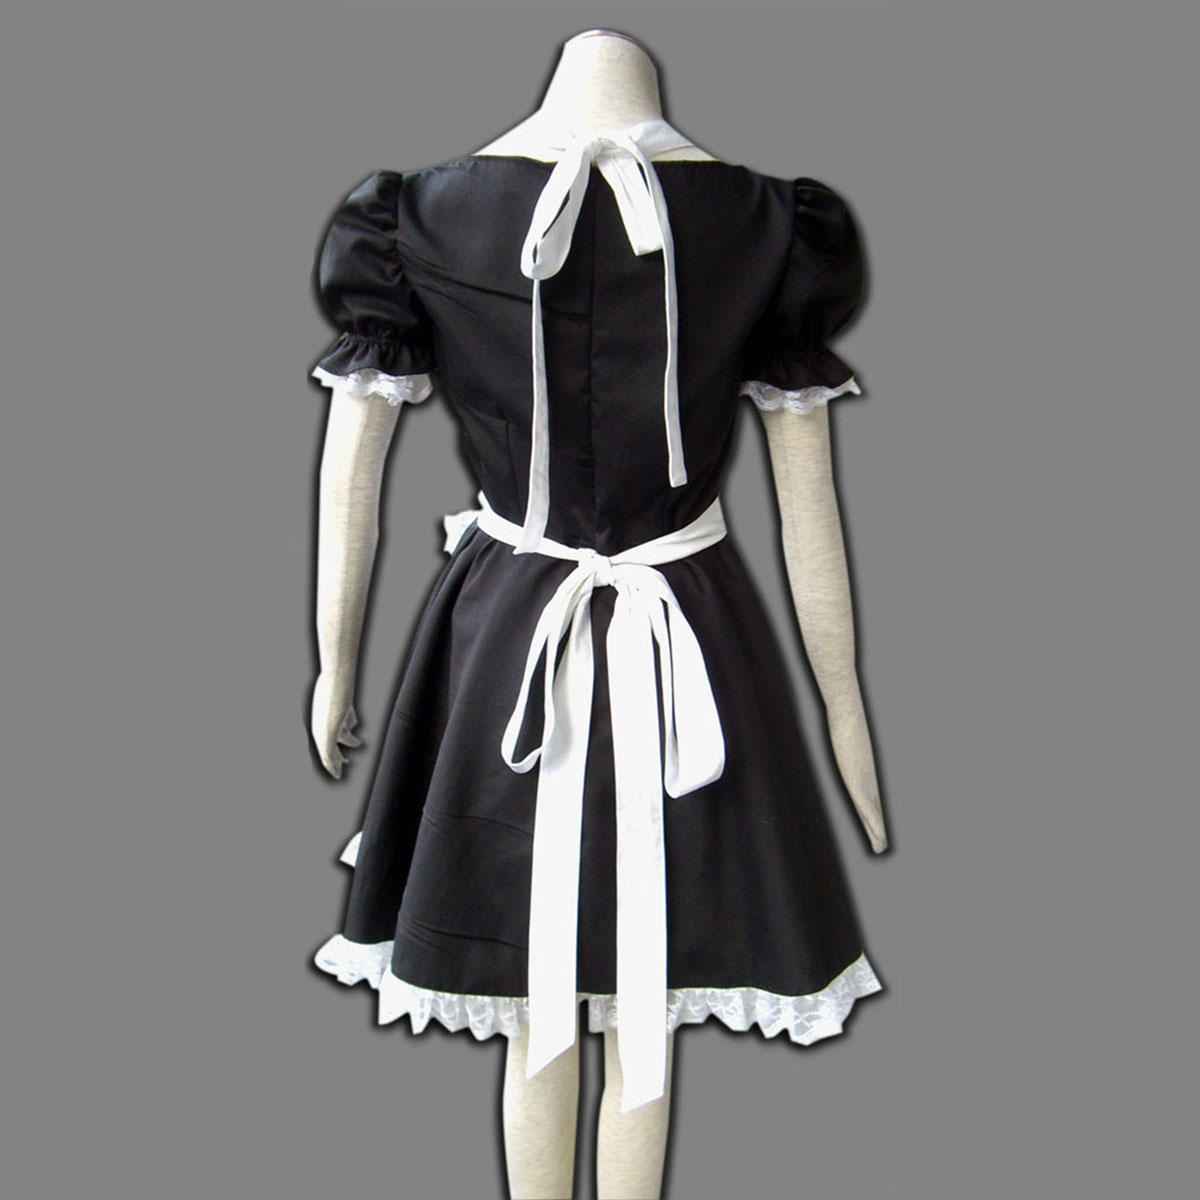 Maid Uniform 2 Black Winged Angle Cosplay Costumes AU